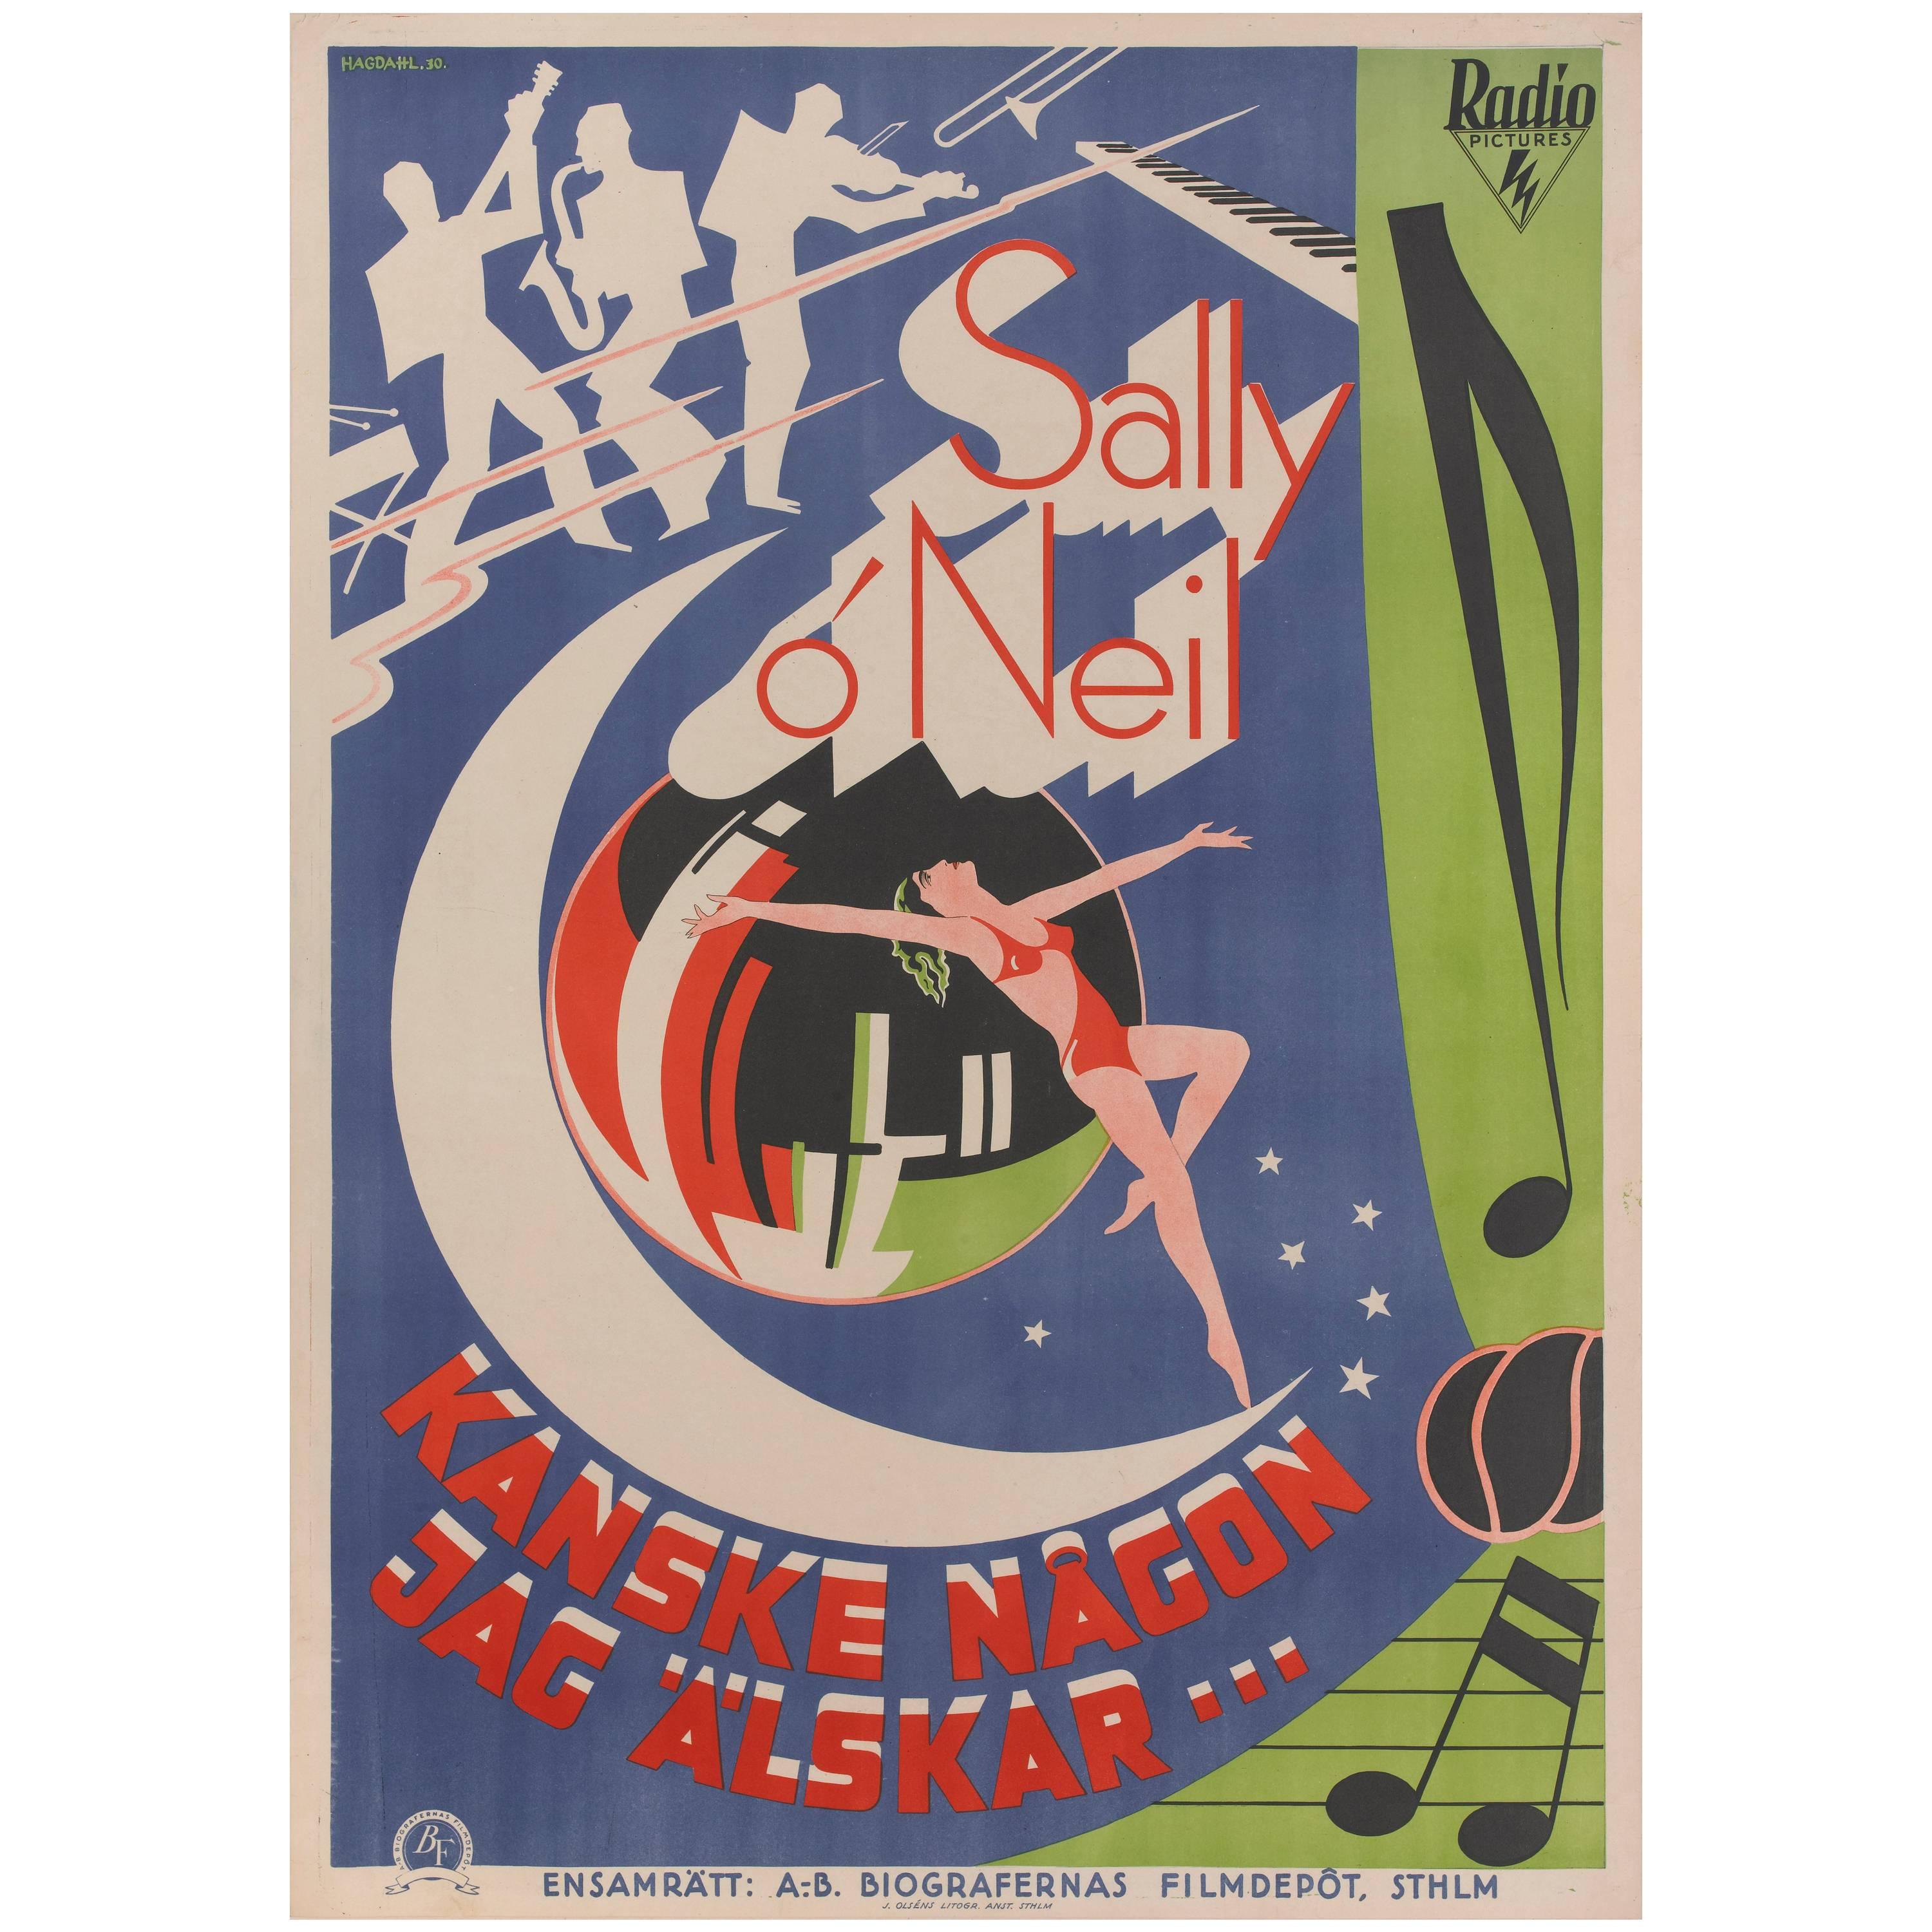 "Jazz Heaven / Kanske Nagon Jag Akskar" Original Swedish Film Poster For Sale